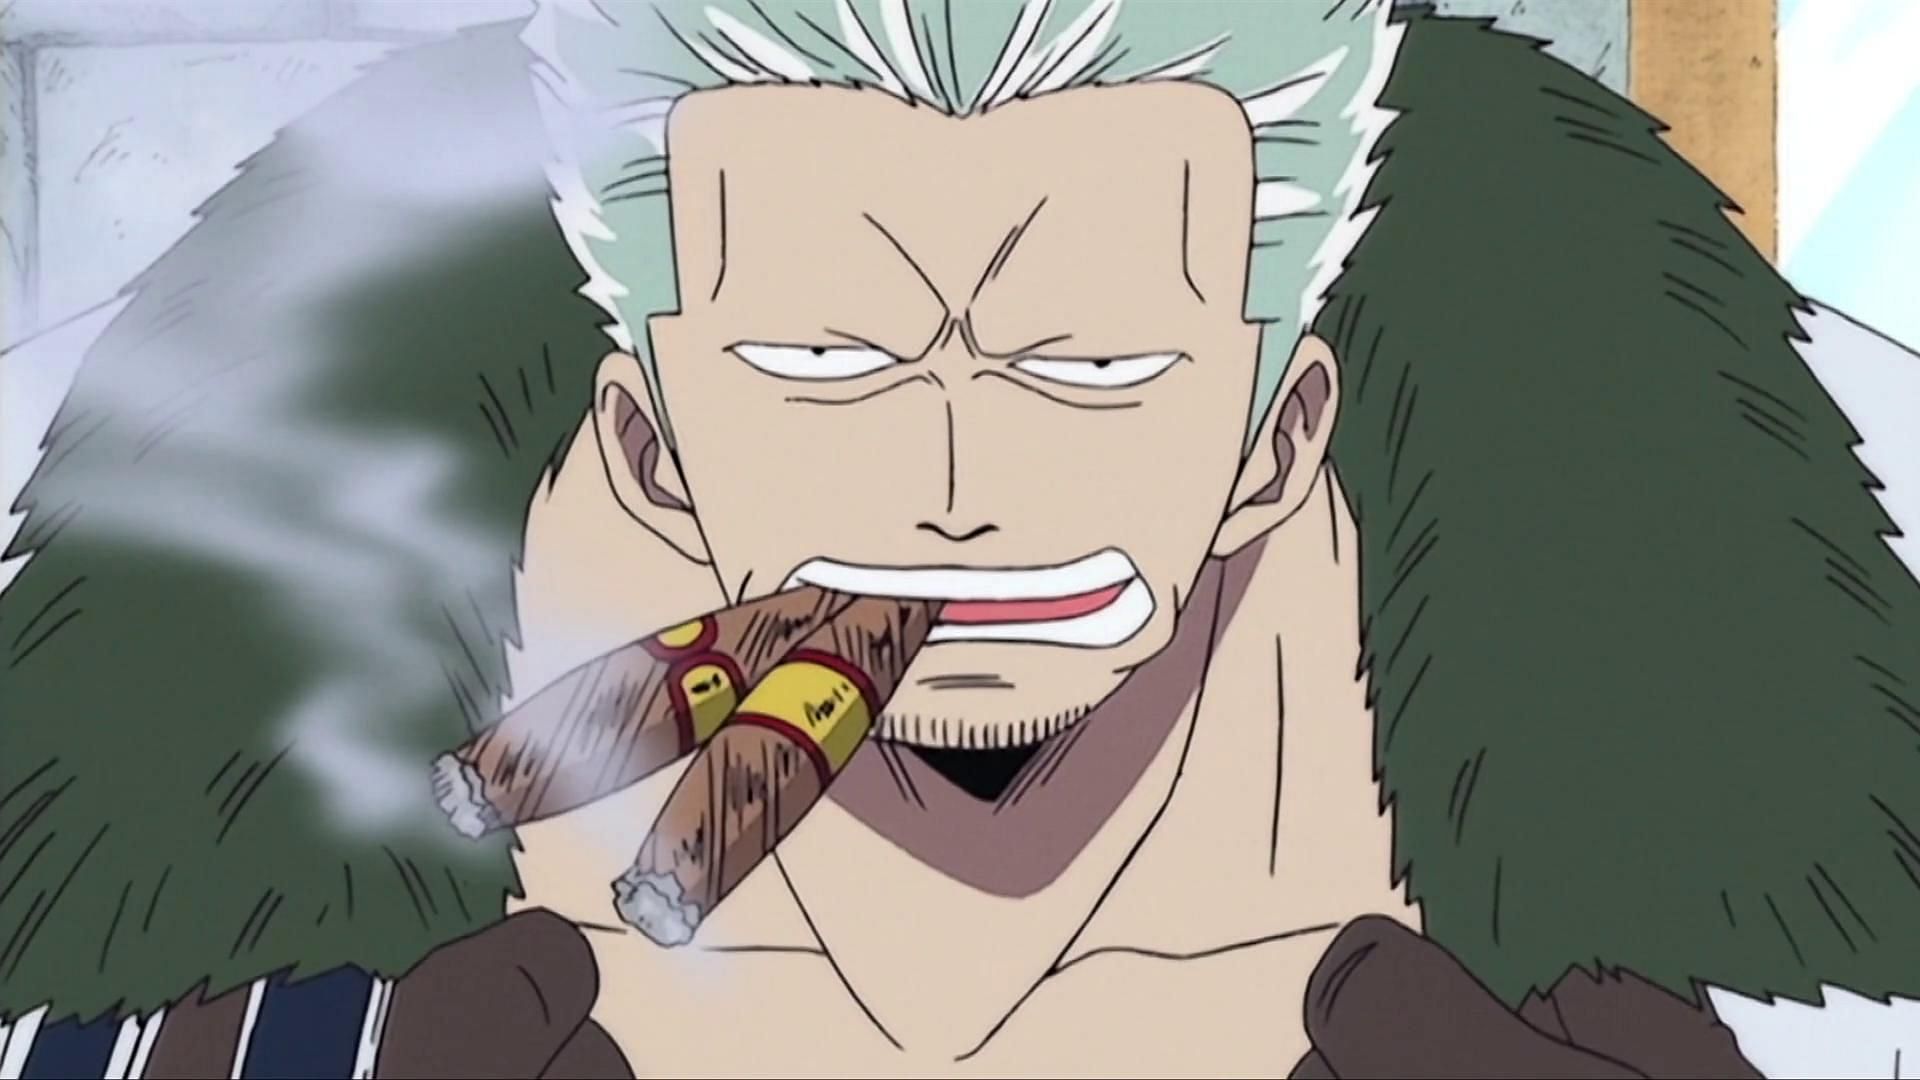 &quot;White Hunter&quot; Smoker (Image via Toei Animation)